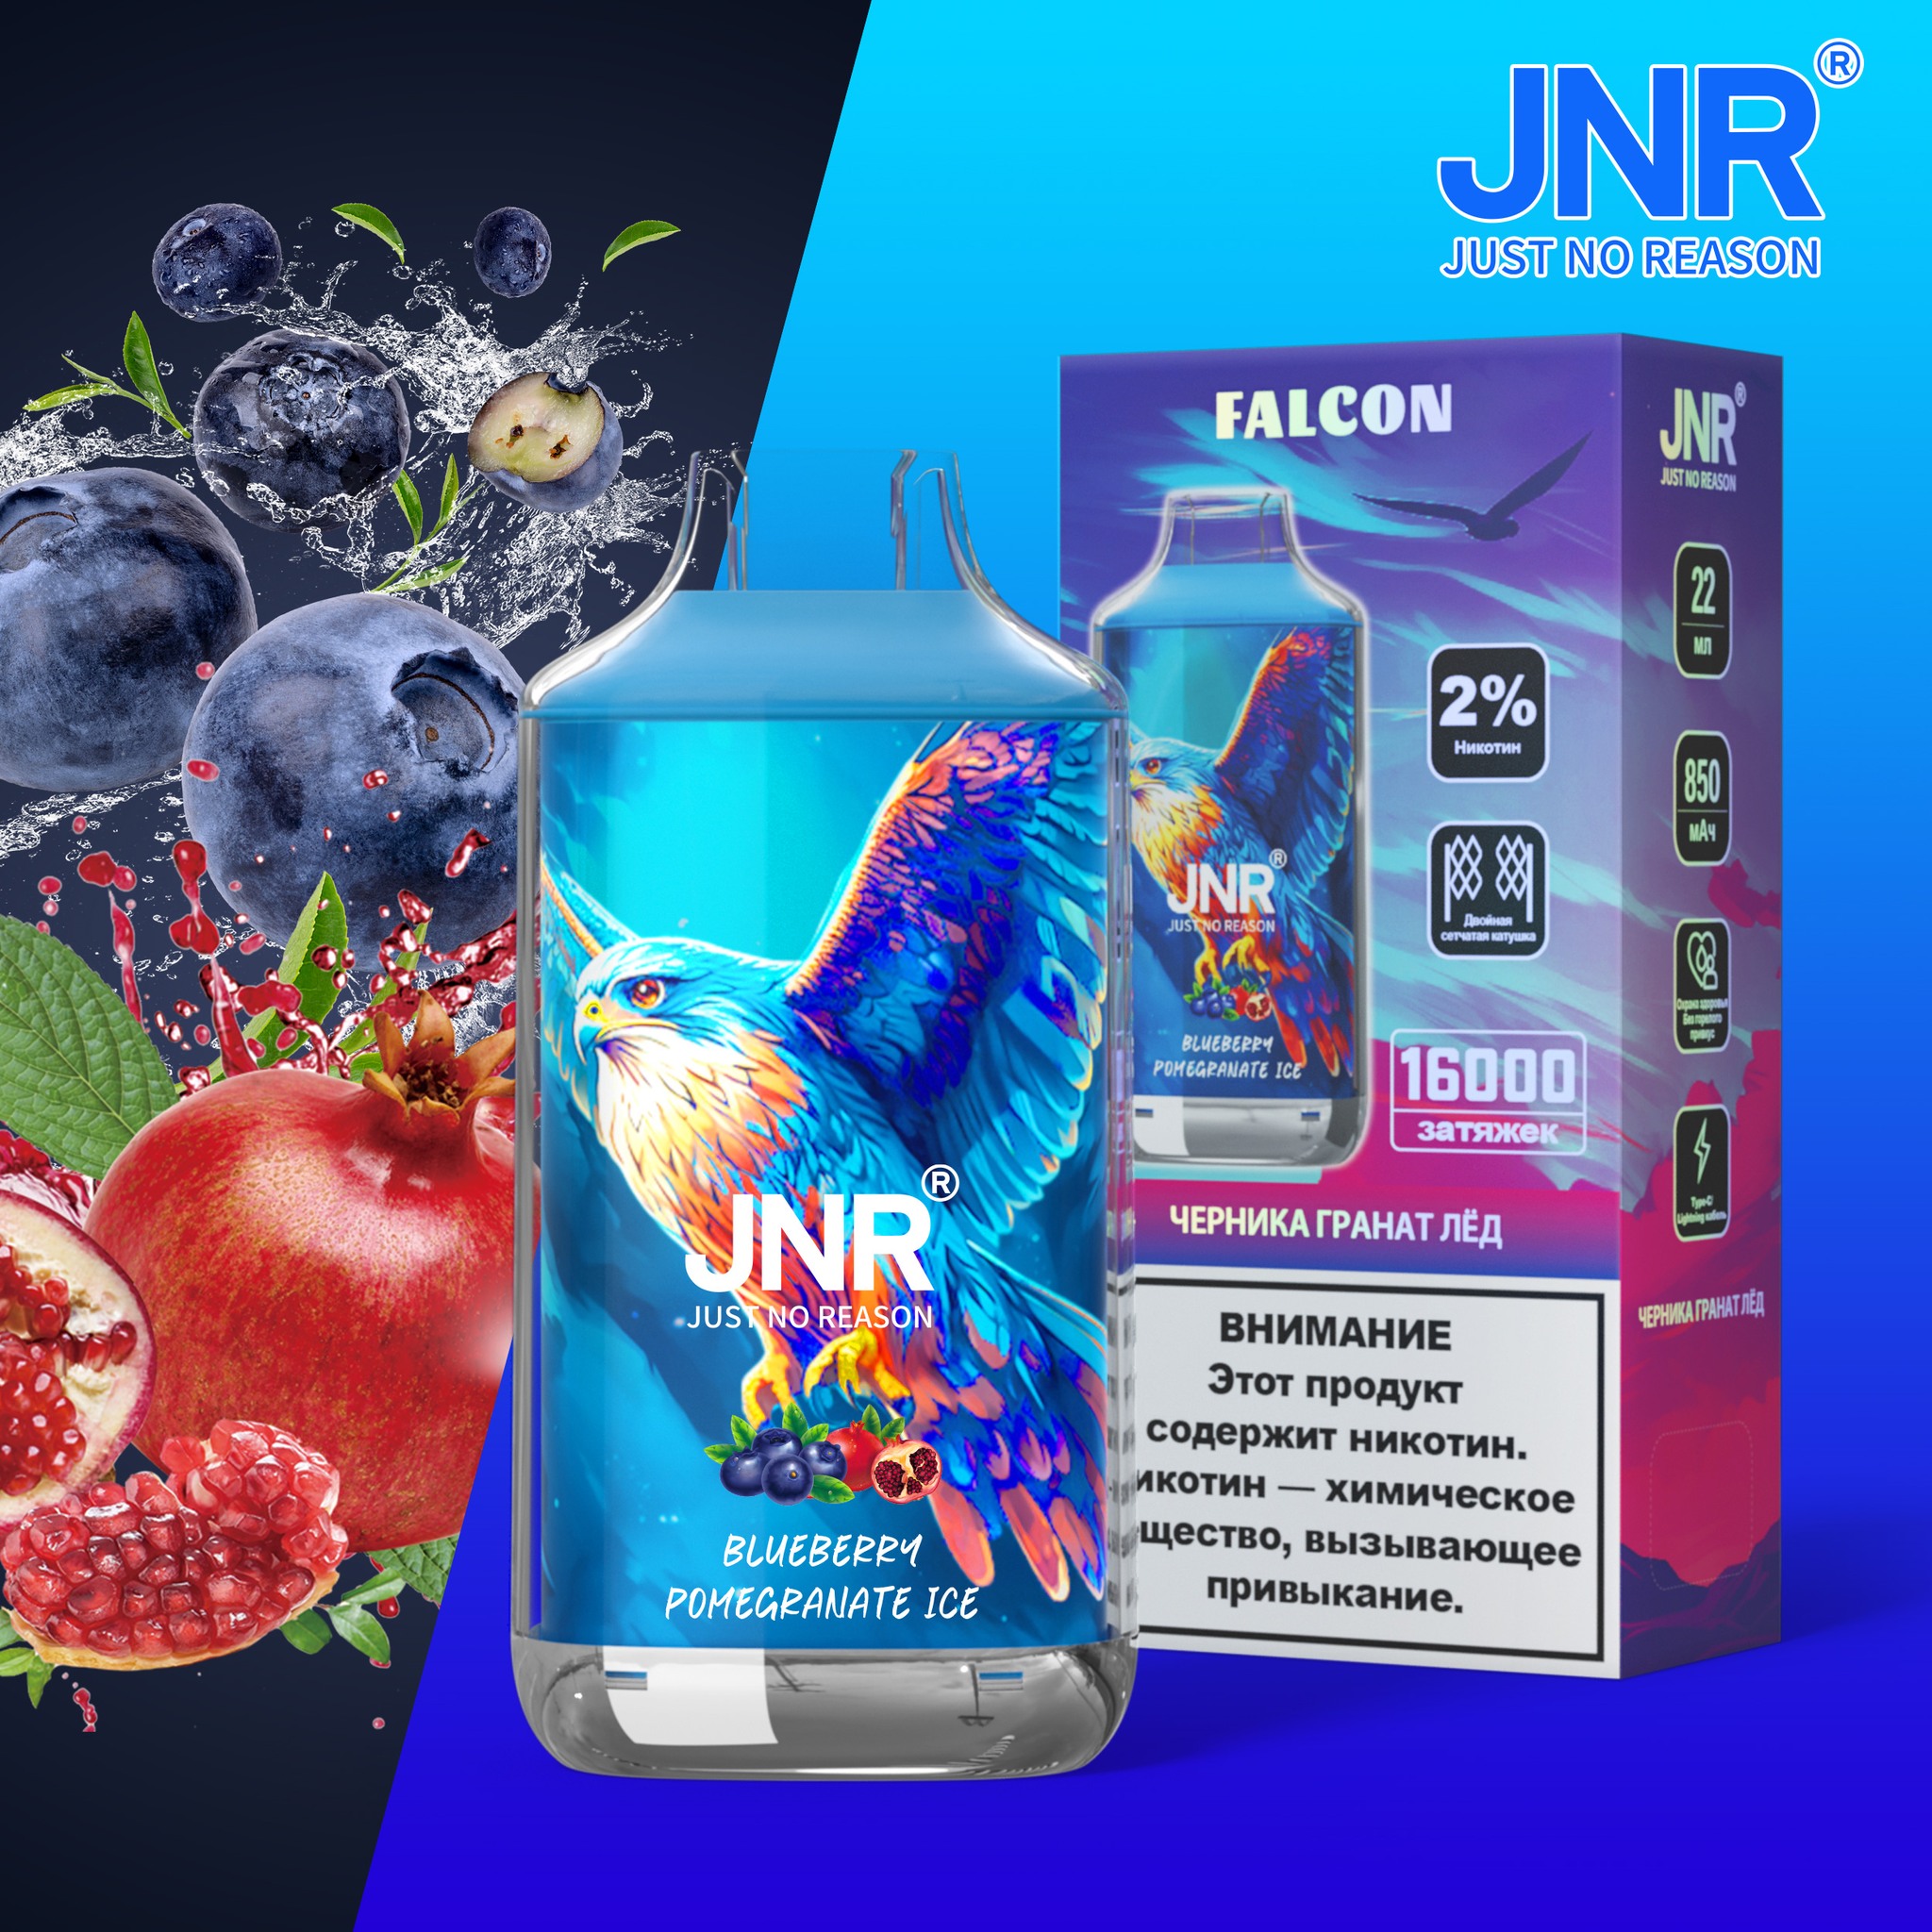 PUFF JNR FALCON 16000 - BLUEBERRY POMEGRANATE ICE